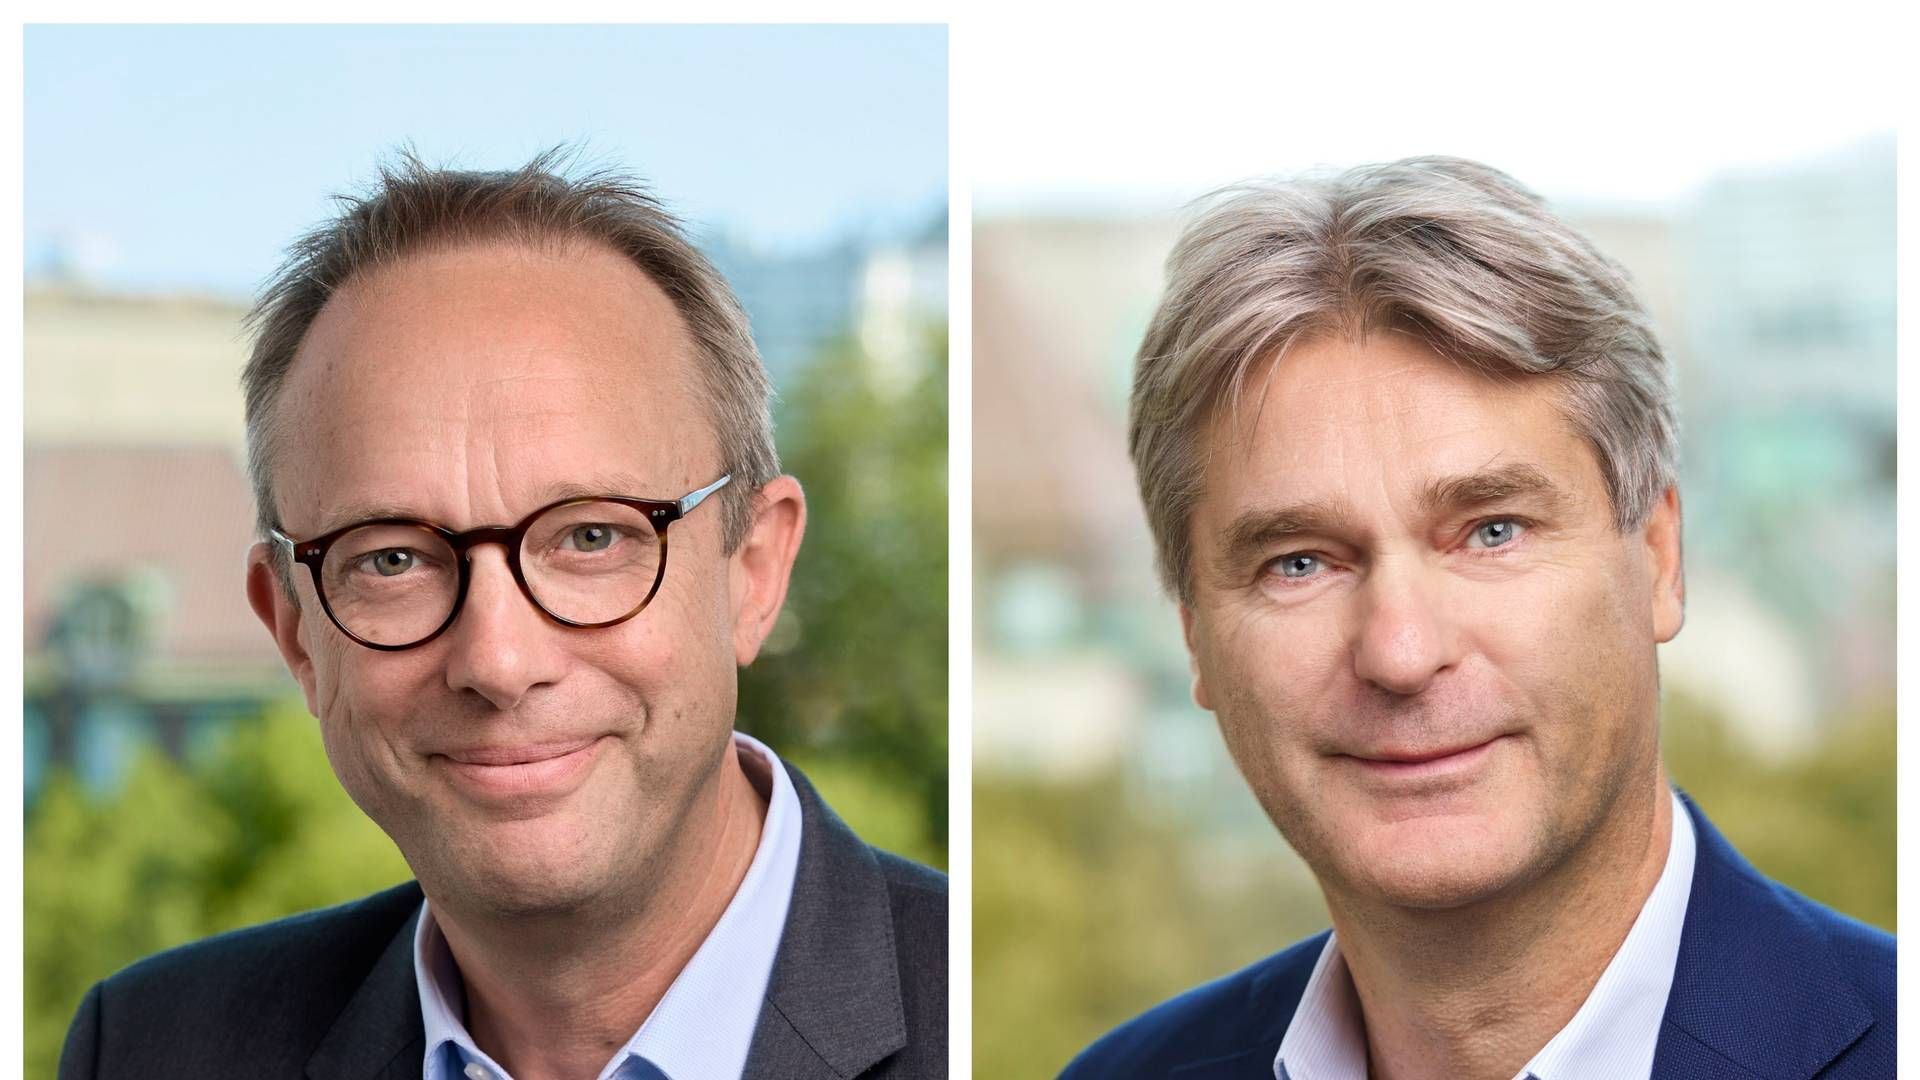 Pål Bergström (left) replaced Richard Gröttheim (right) as CEO of Sweden's default pension fund, AP7, on June 1 this year. | Photo: AP7/PR